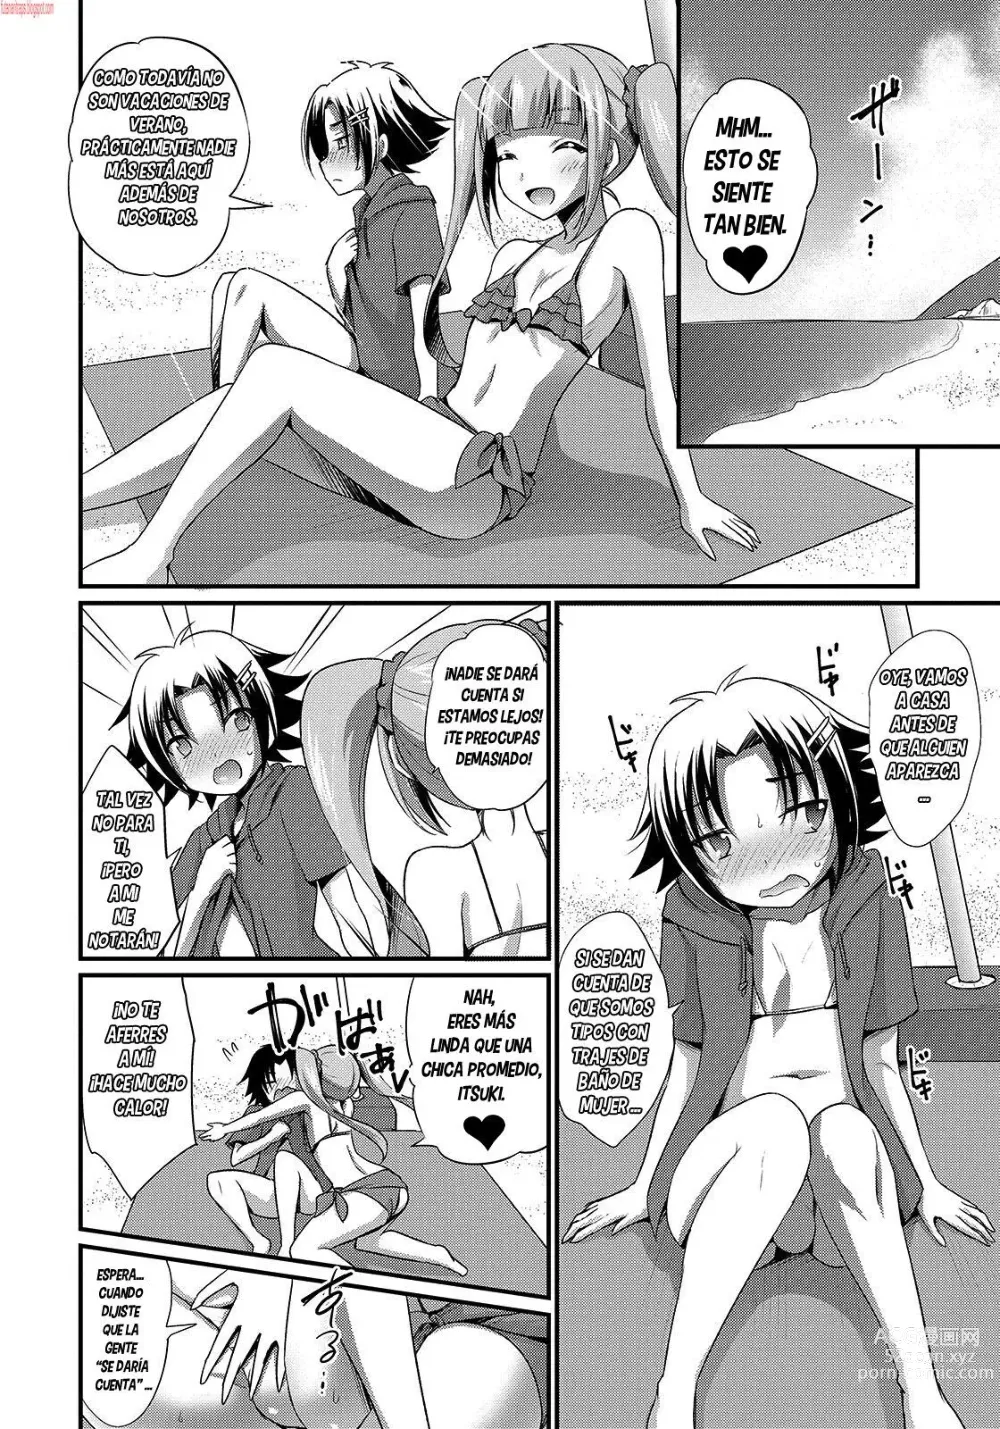 Page 2 of manga Drastic Mermaid